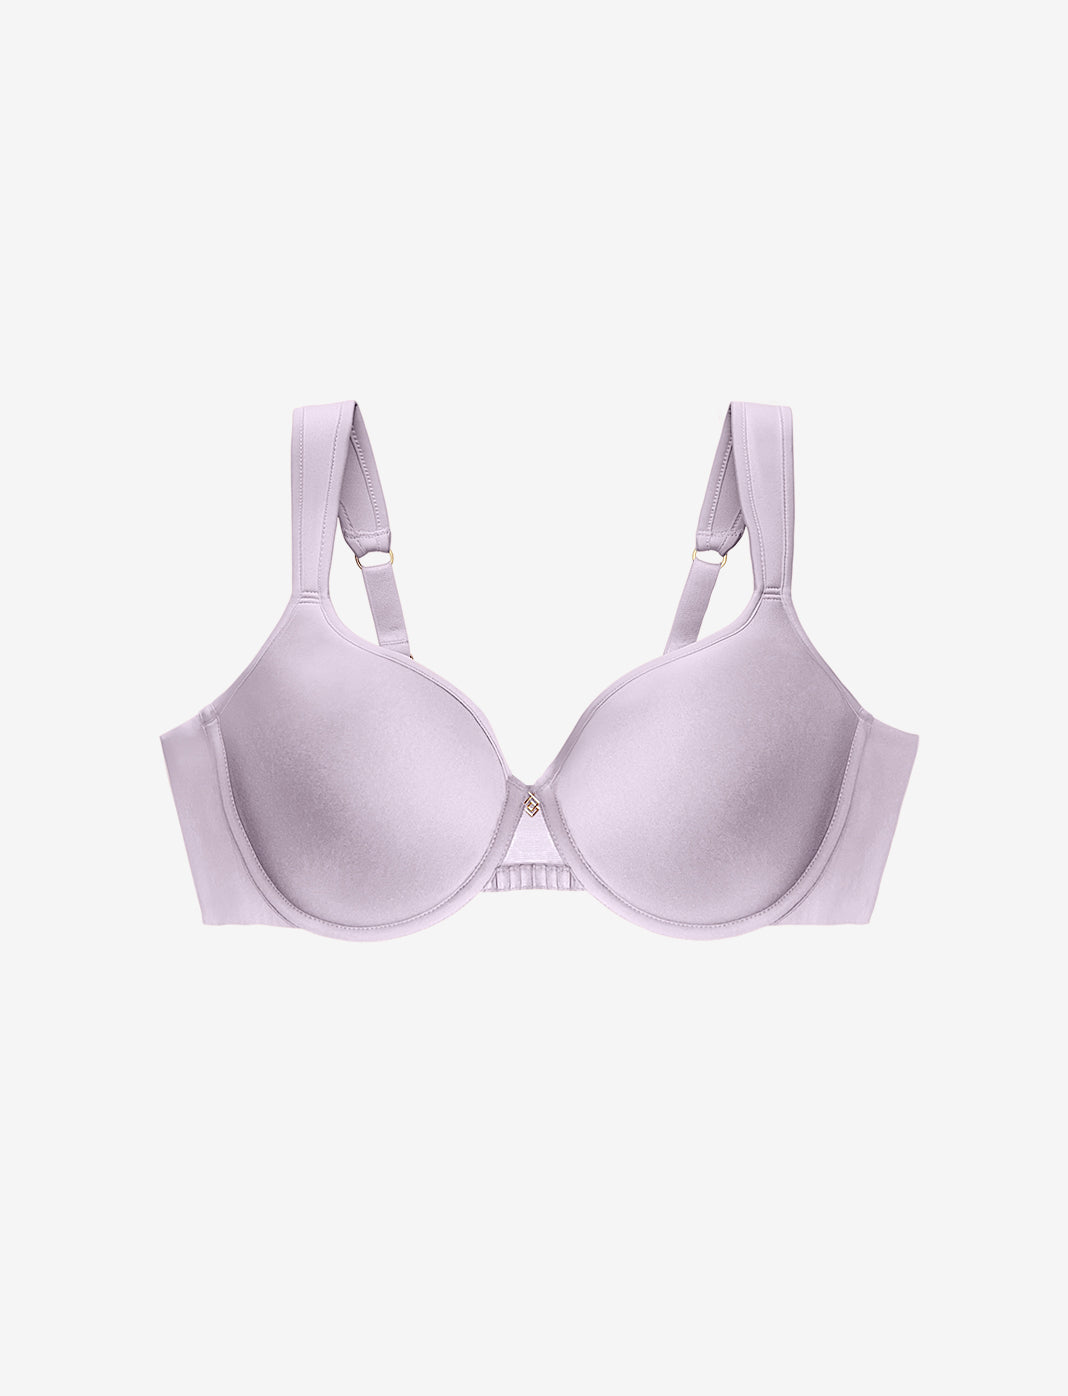 32E Bras: Bras for 32E Boobs and Breast Size Etiquetado Bikini